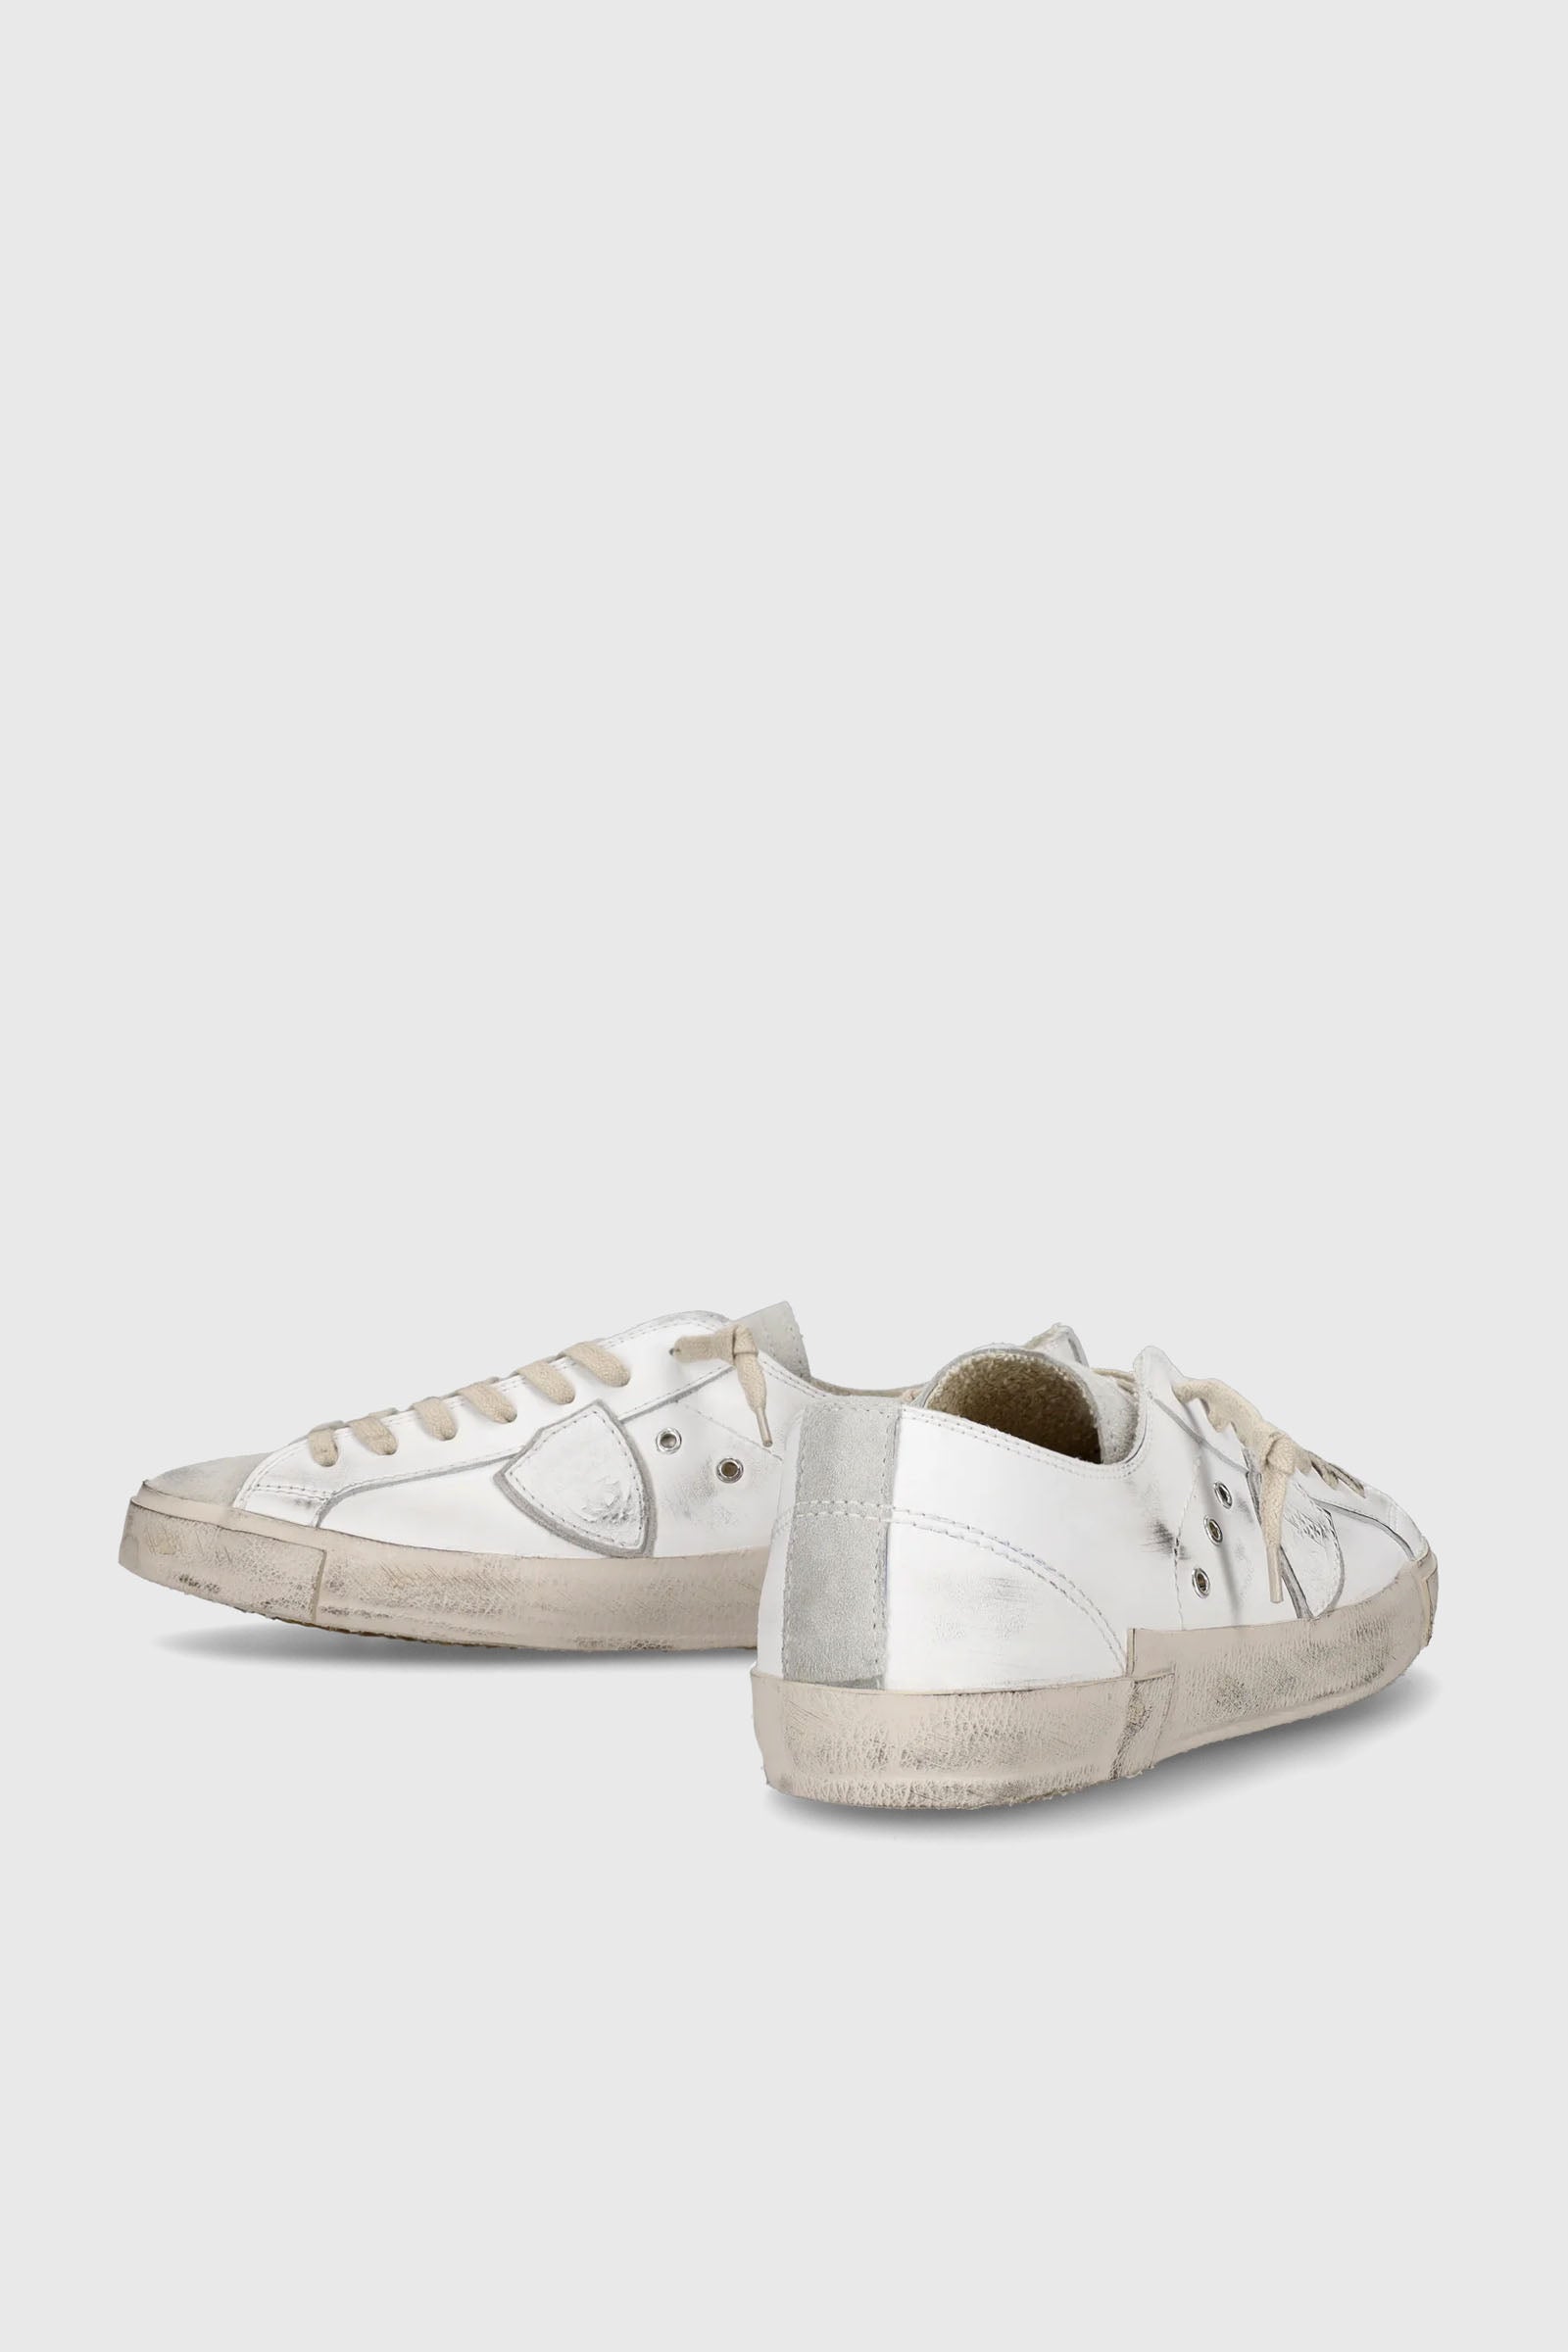 Philippe Model Sneaker PRSX Legere Leather White/Grey - 2